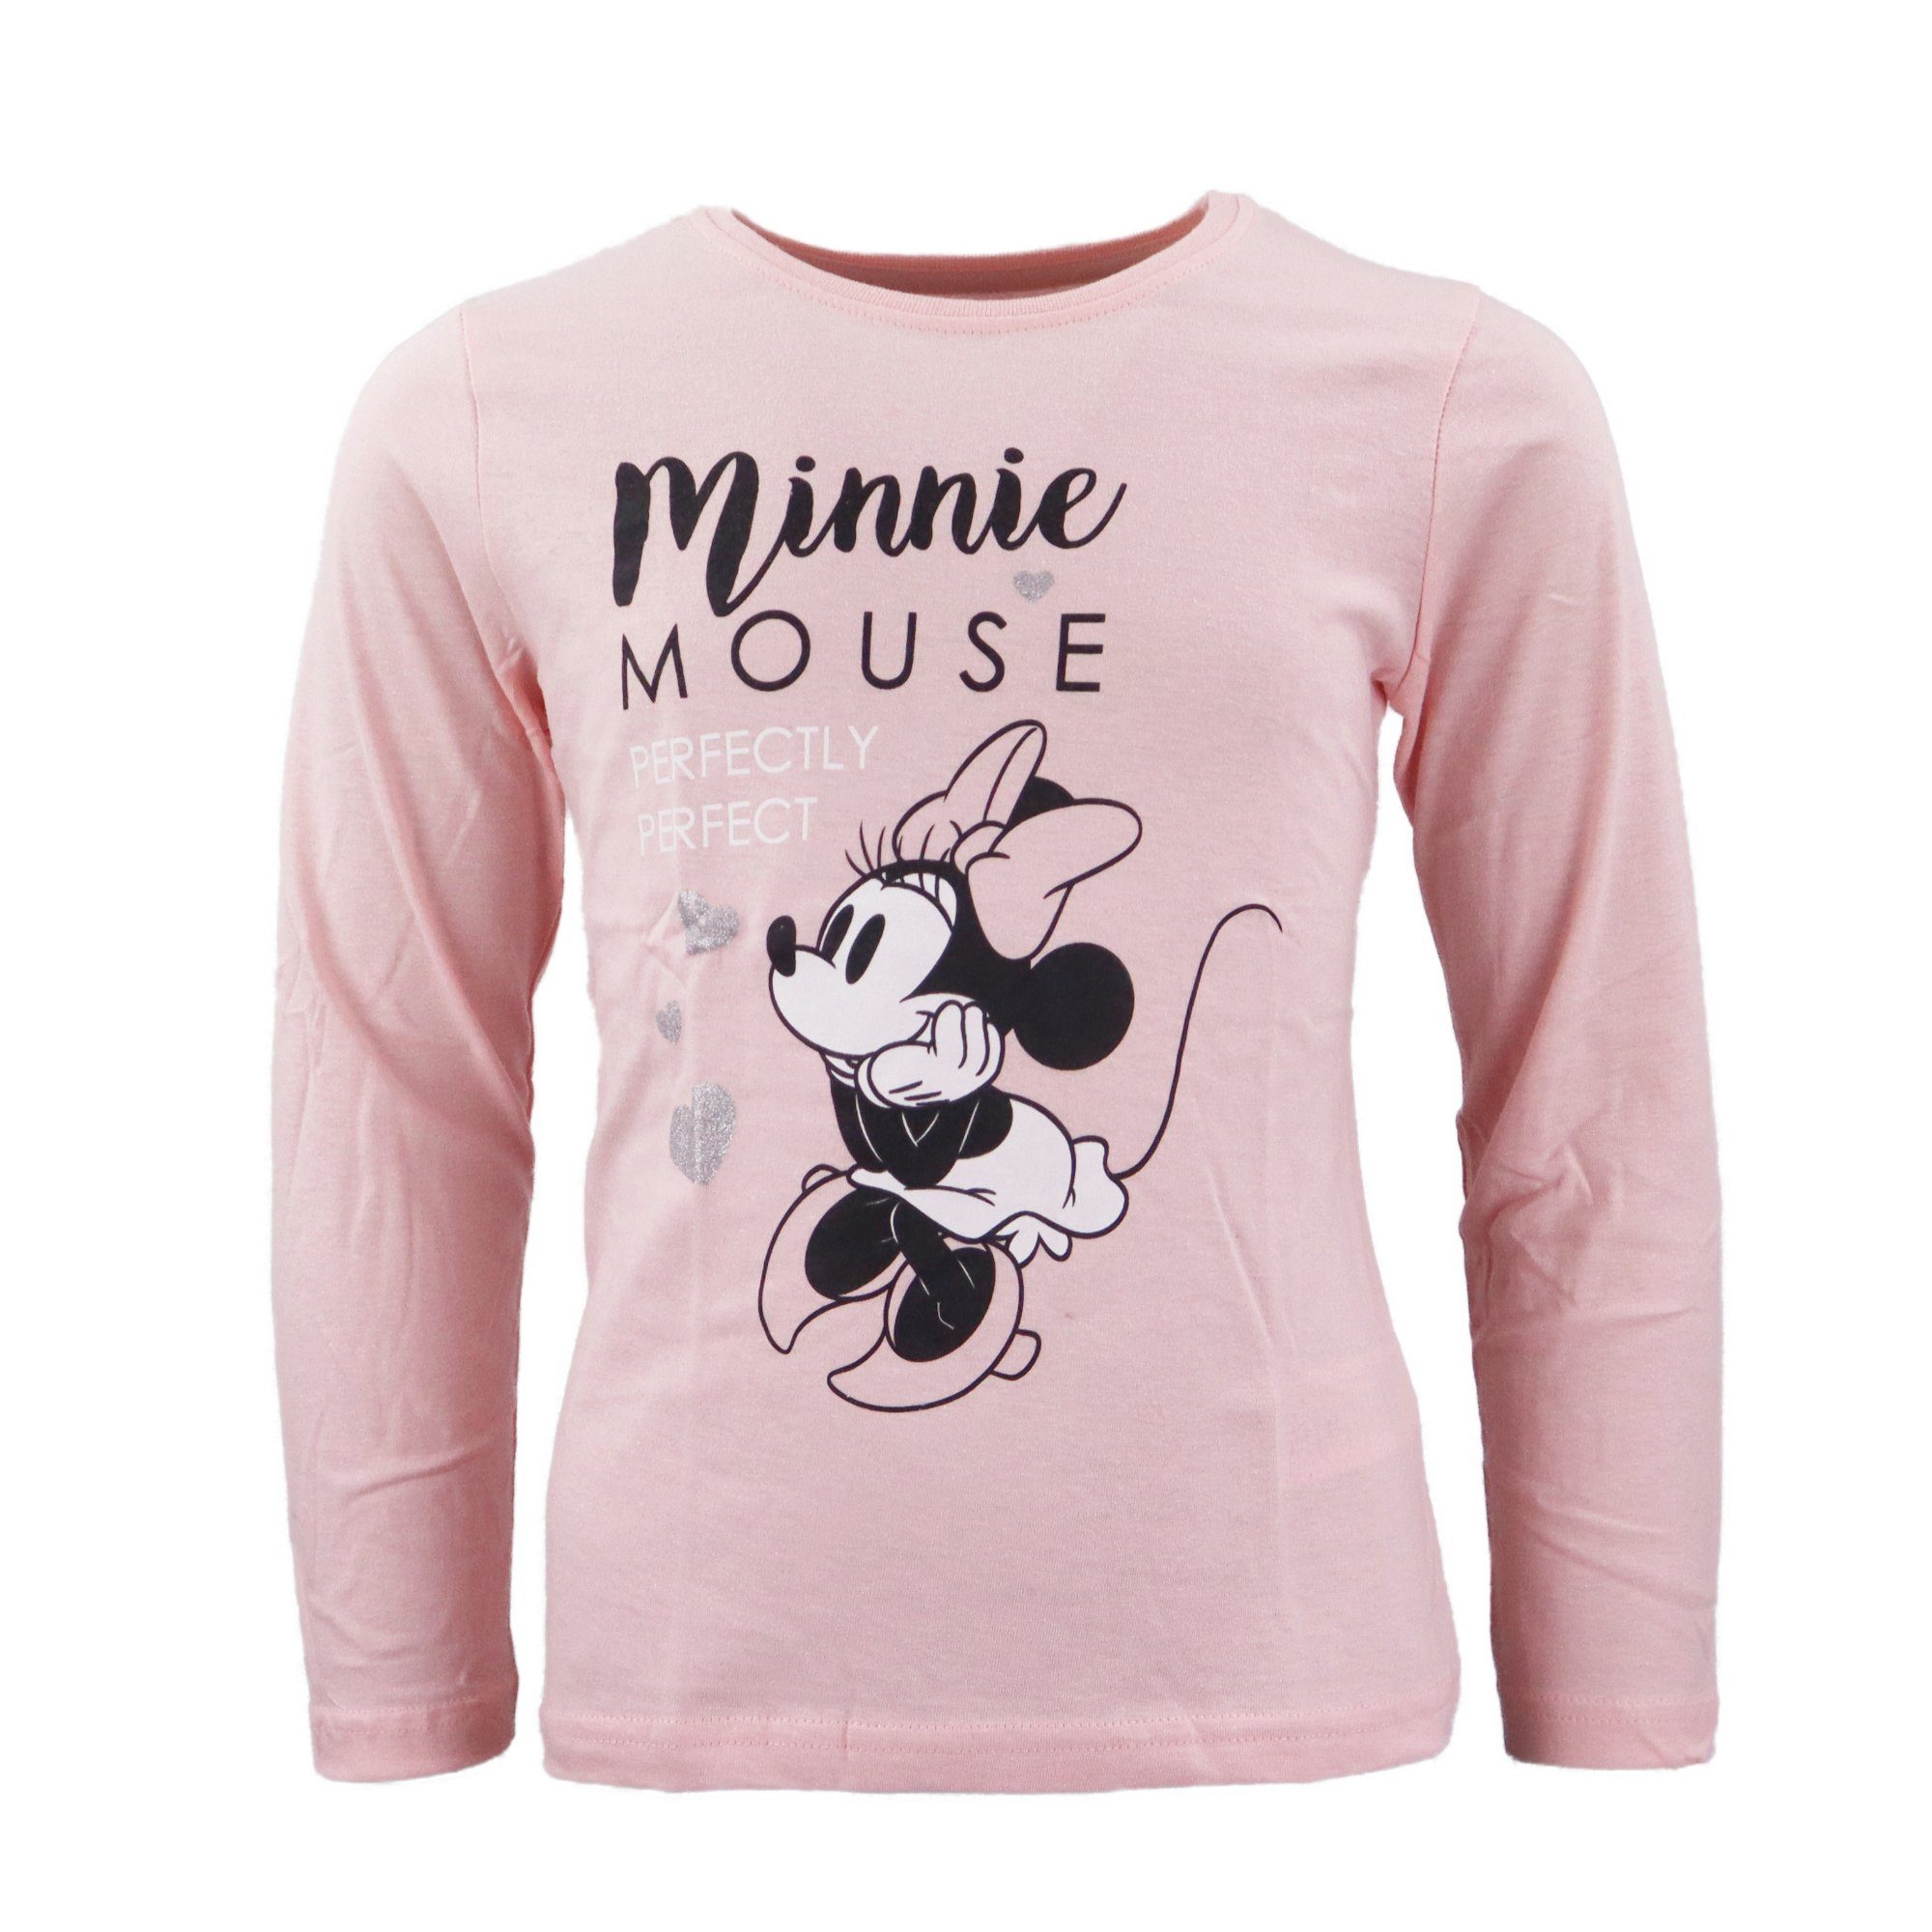 Maus Kinder Disney Shirt Minnie Mädchen Baumwolle Rosa 100% bis 128, Gr. 98 Mouse Langarmshirt Minnie